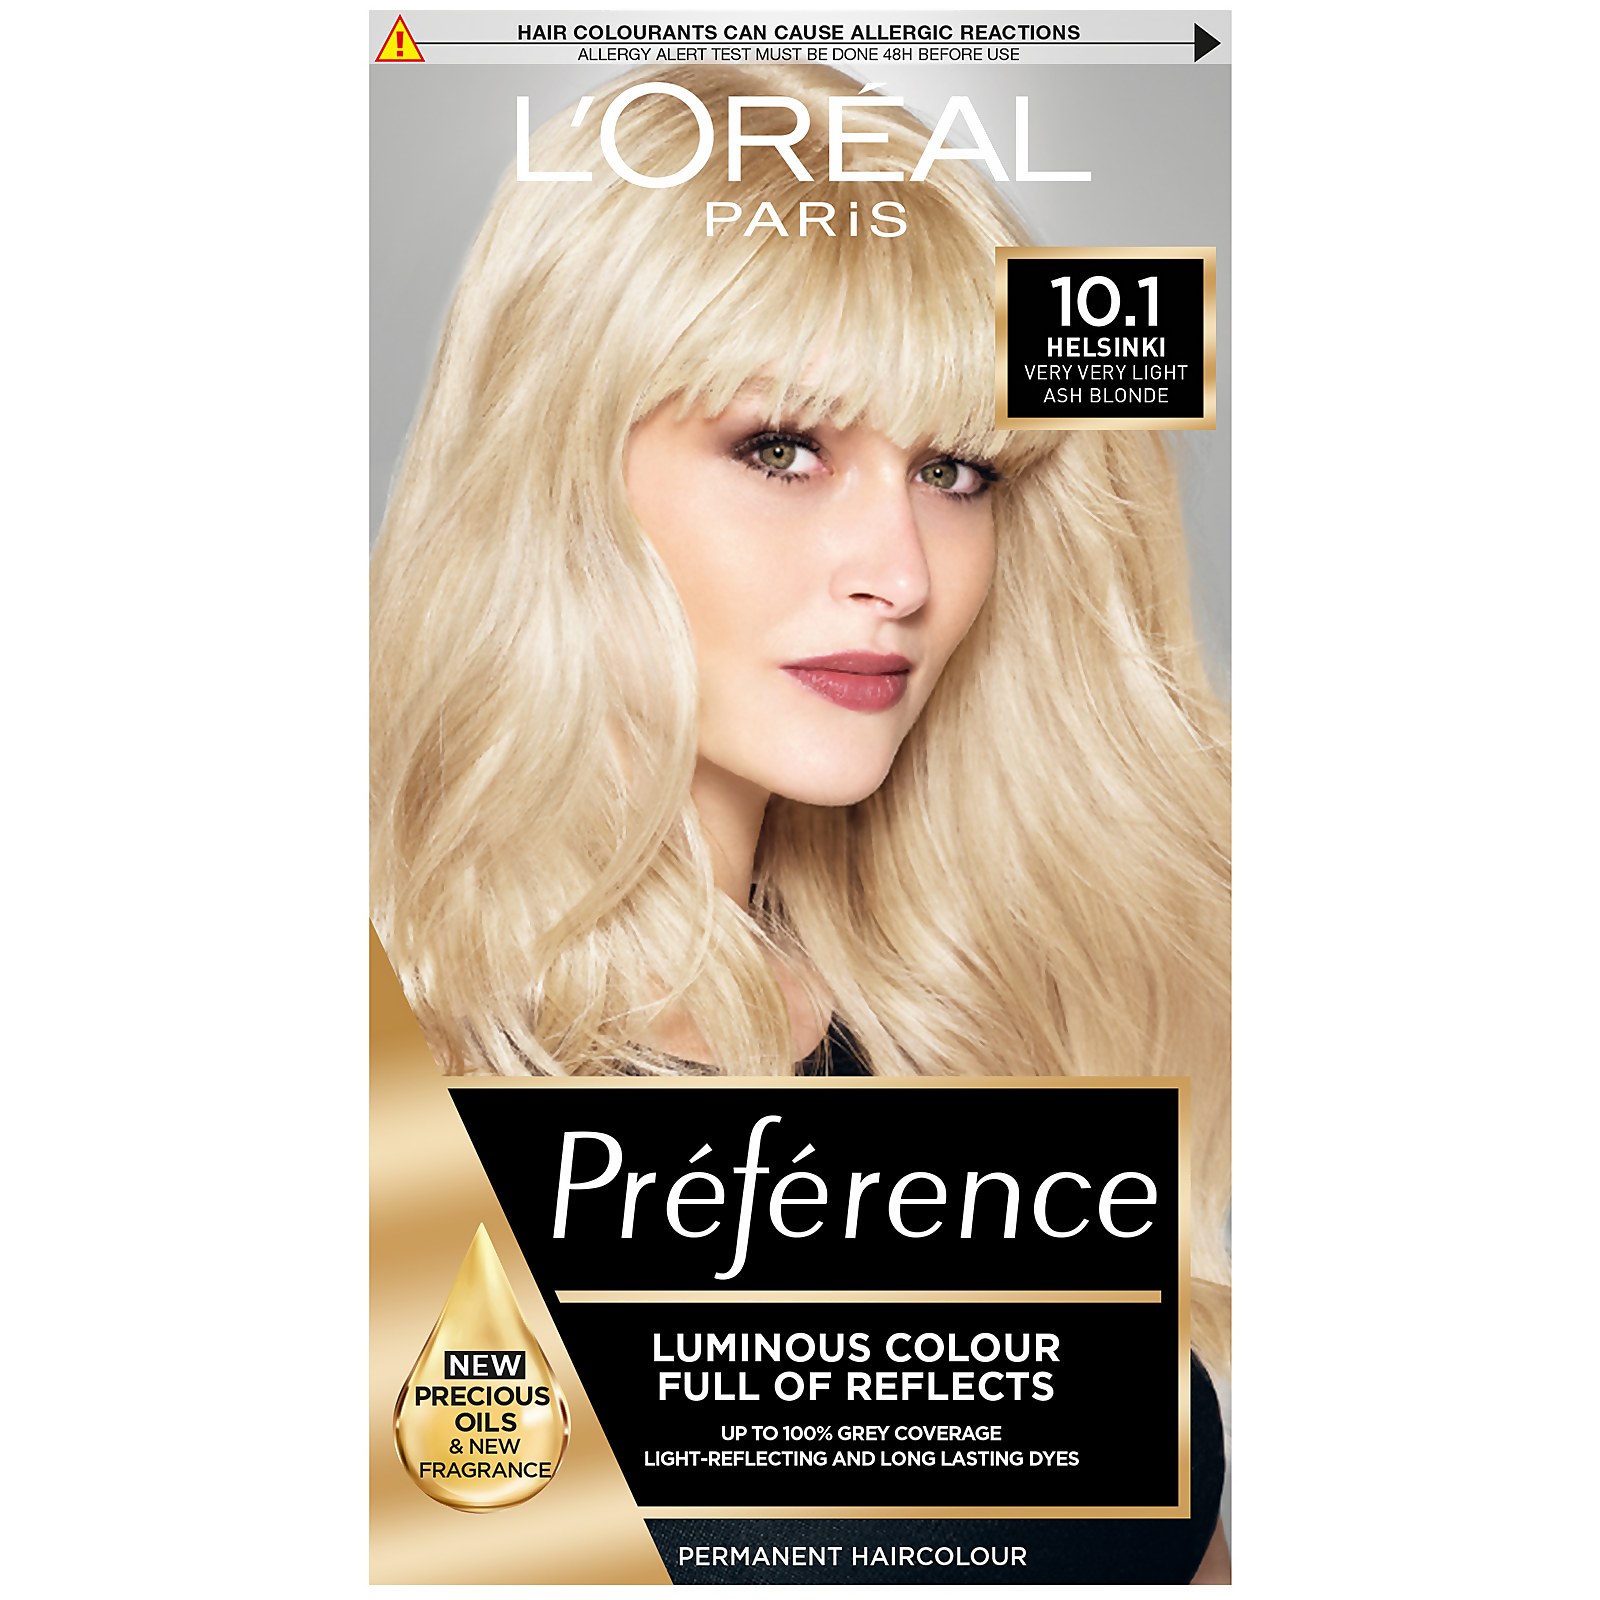 L'Oreal Paris Preference Infinia Hair Dye (Various Shades) - 10.1 Helsinki Very Light Ash Blonde